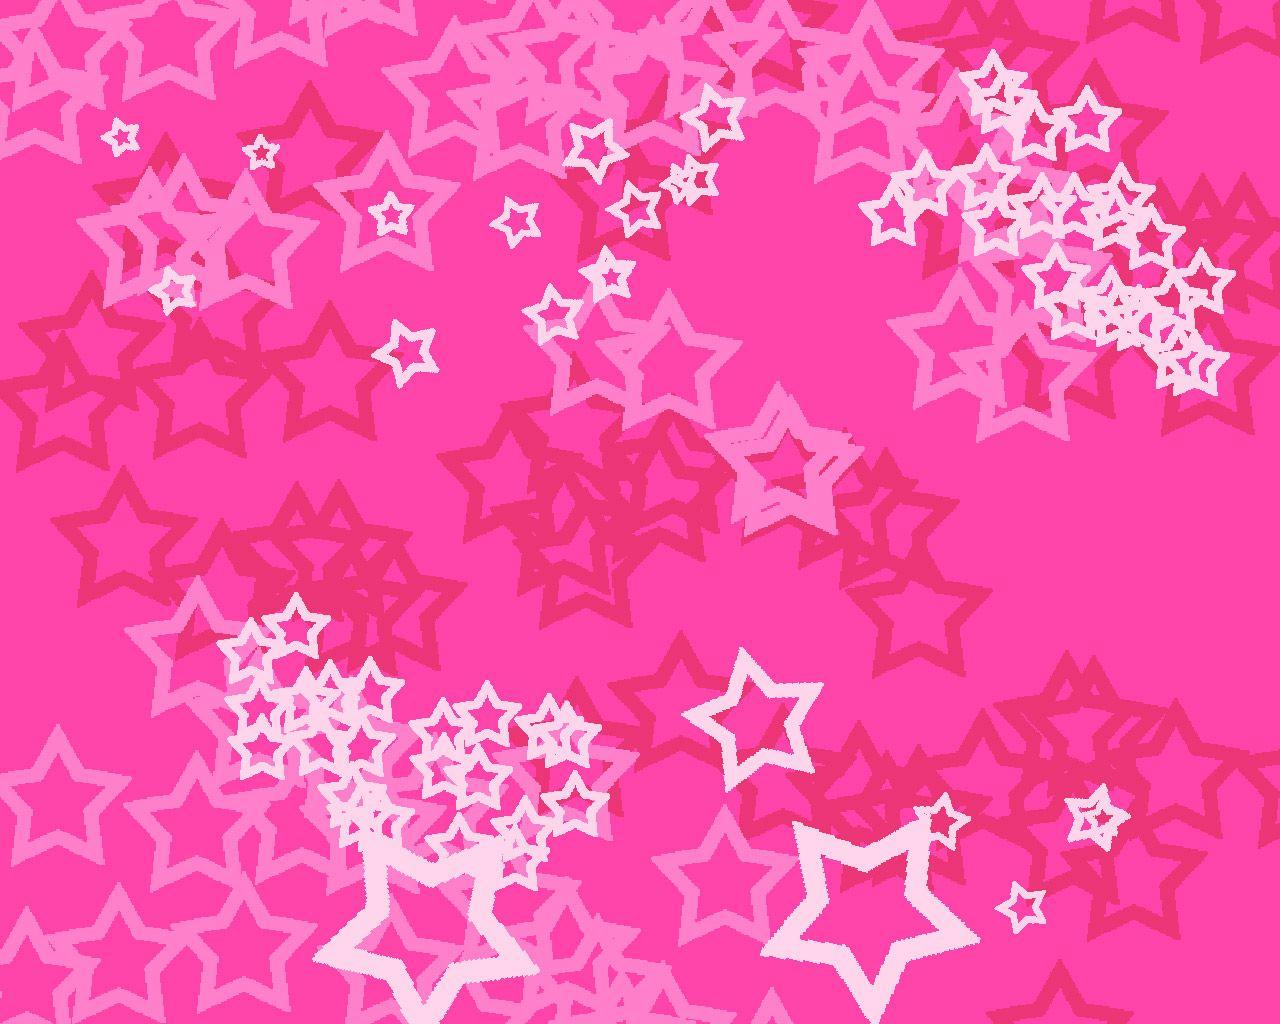 Stunning Pink Wallpaper Background